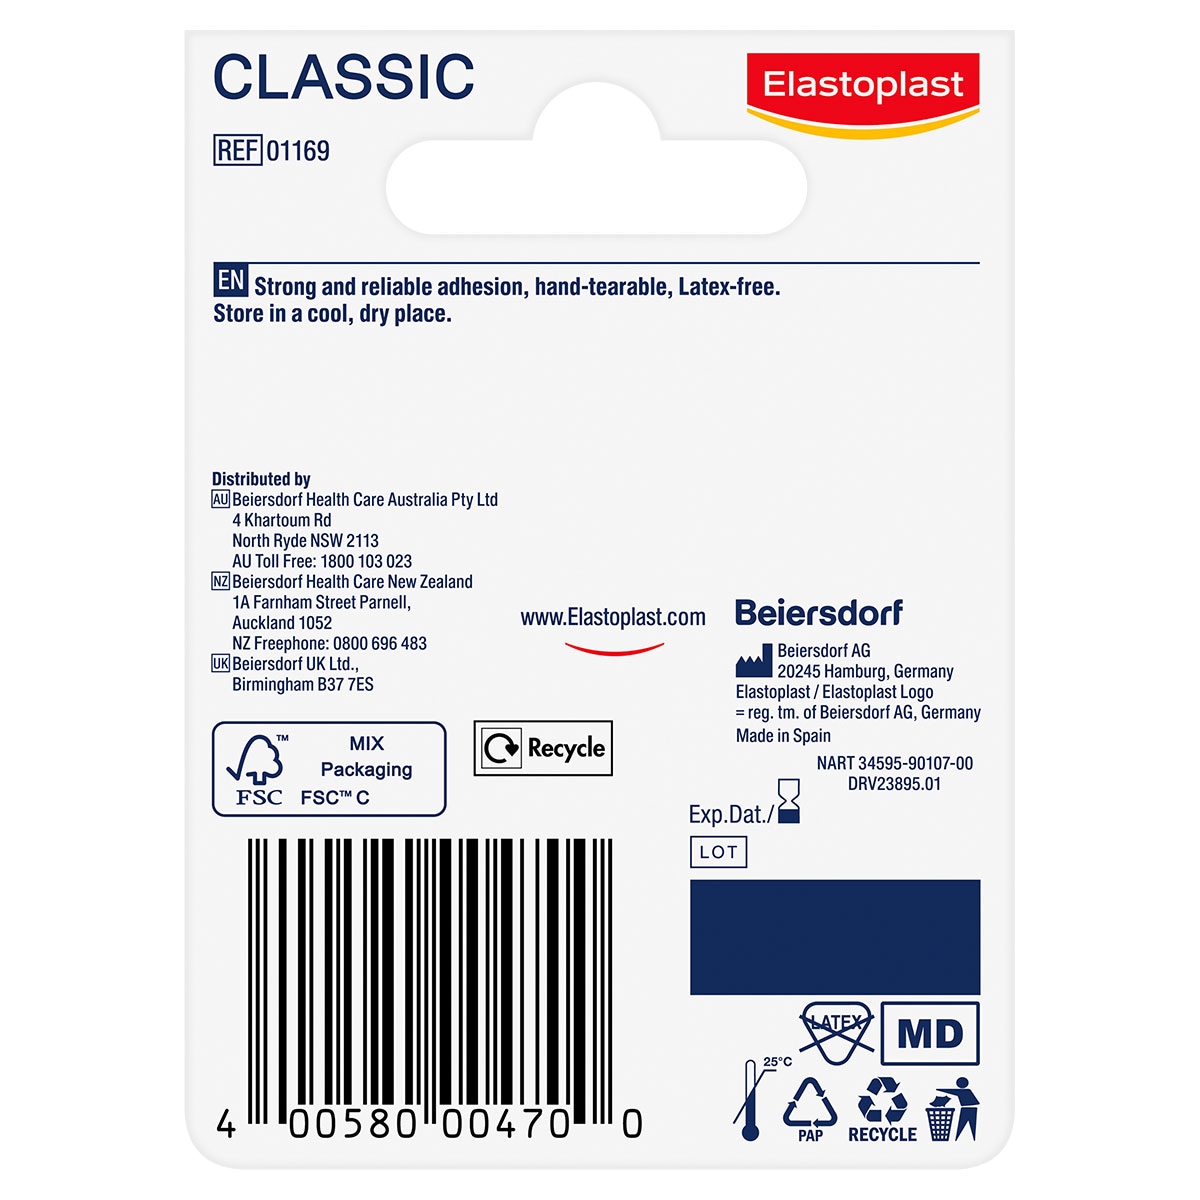 Elastoplast Classic Fixation Tape 2.5cm x 5m